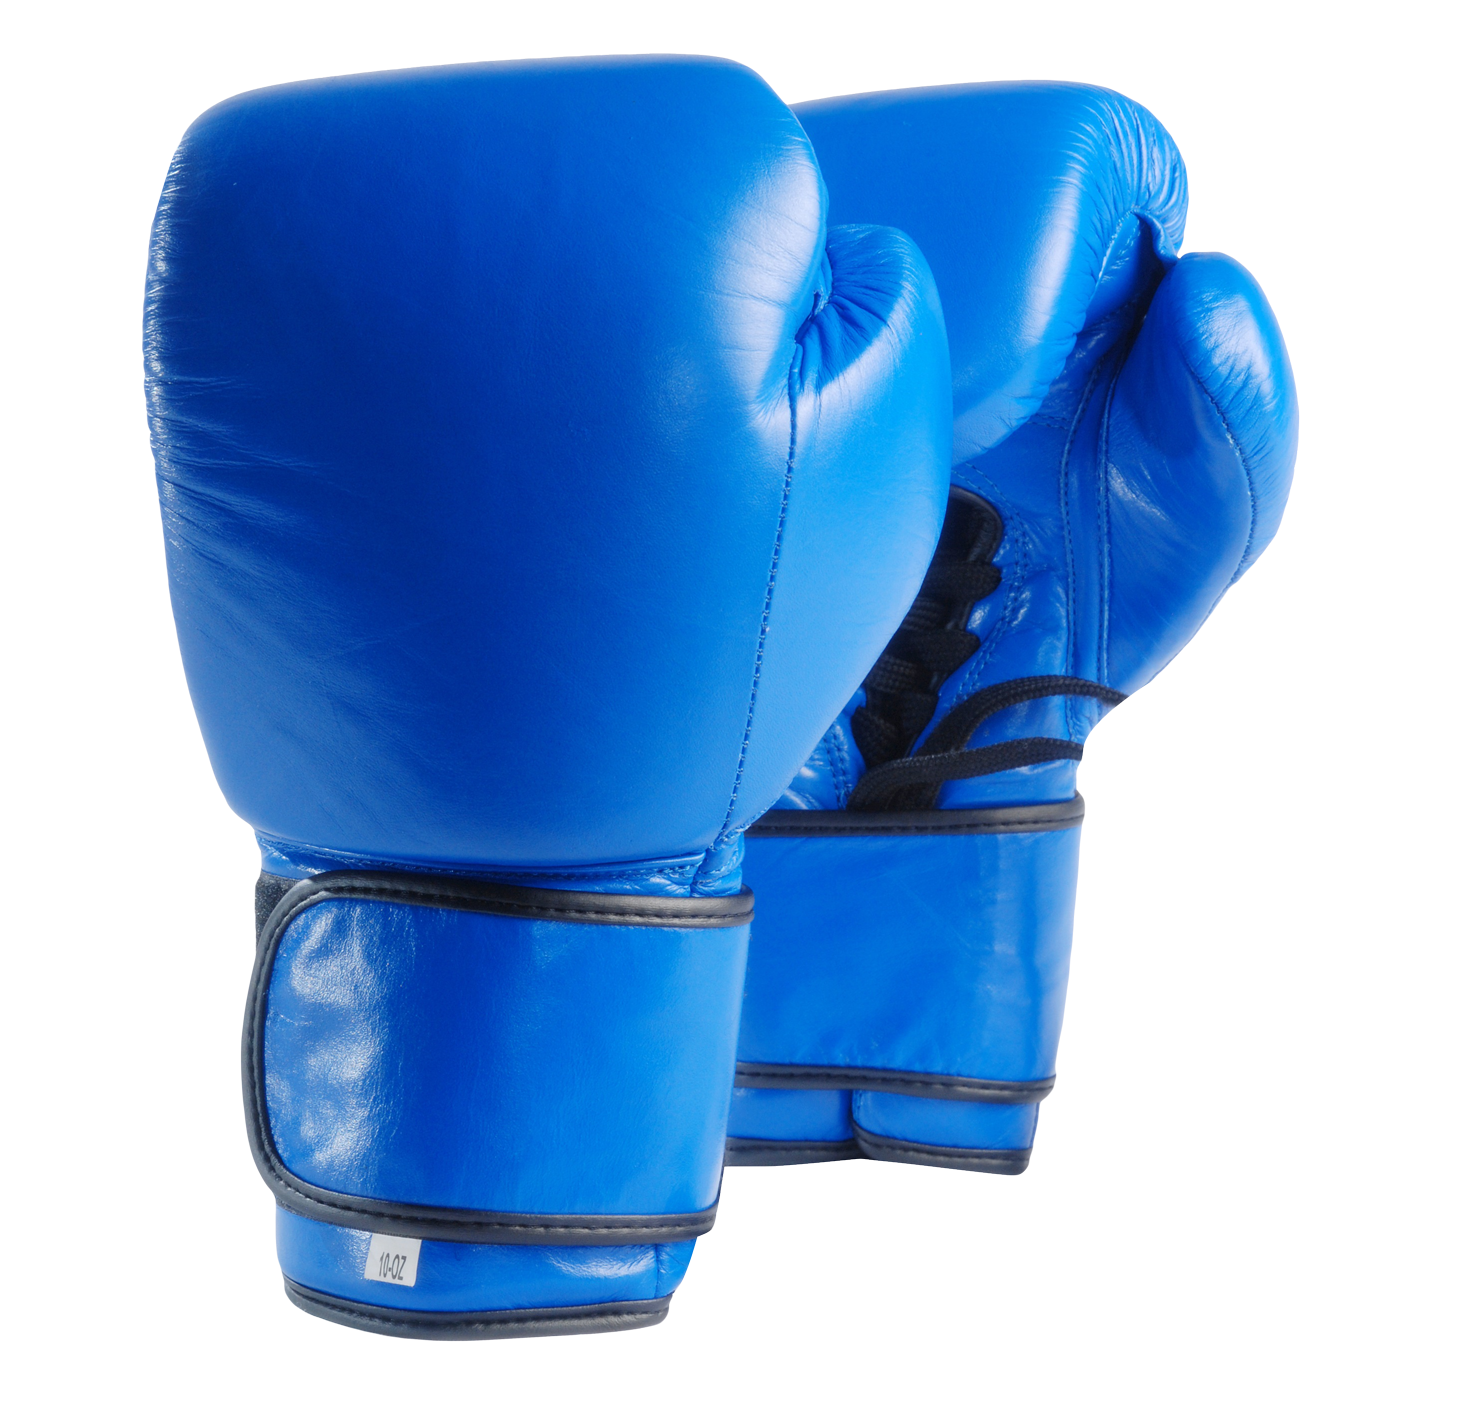 Blue Boxing Gloves PNG Image